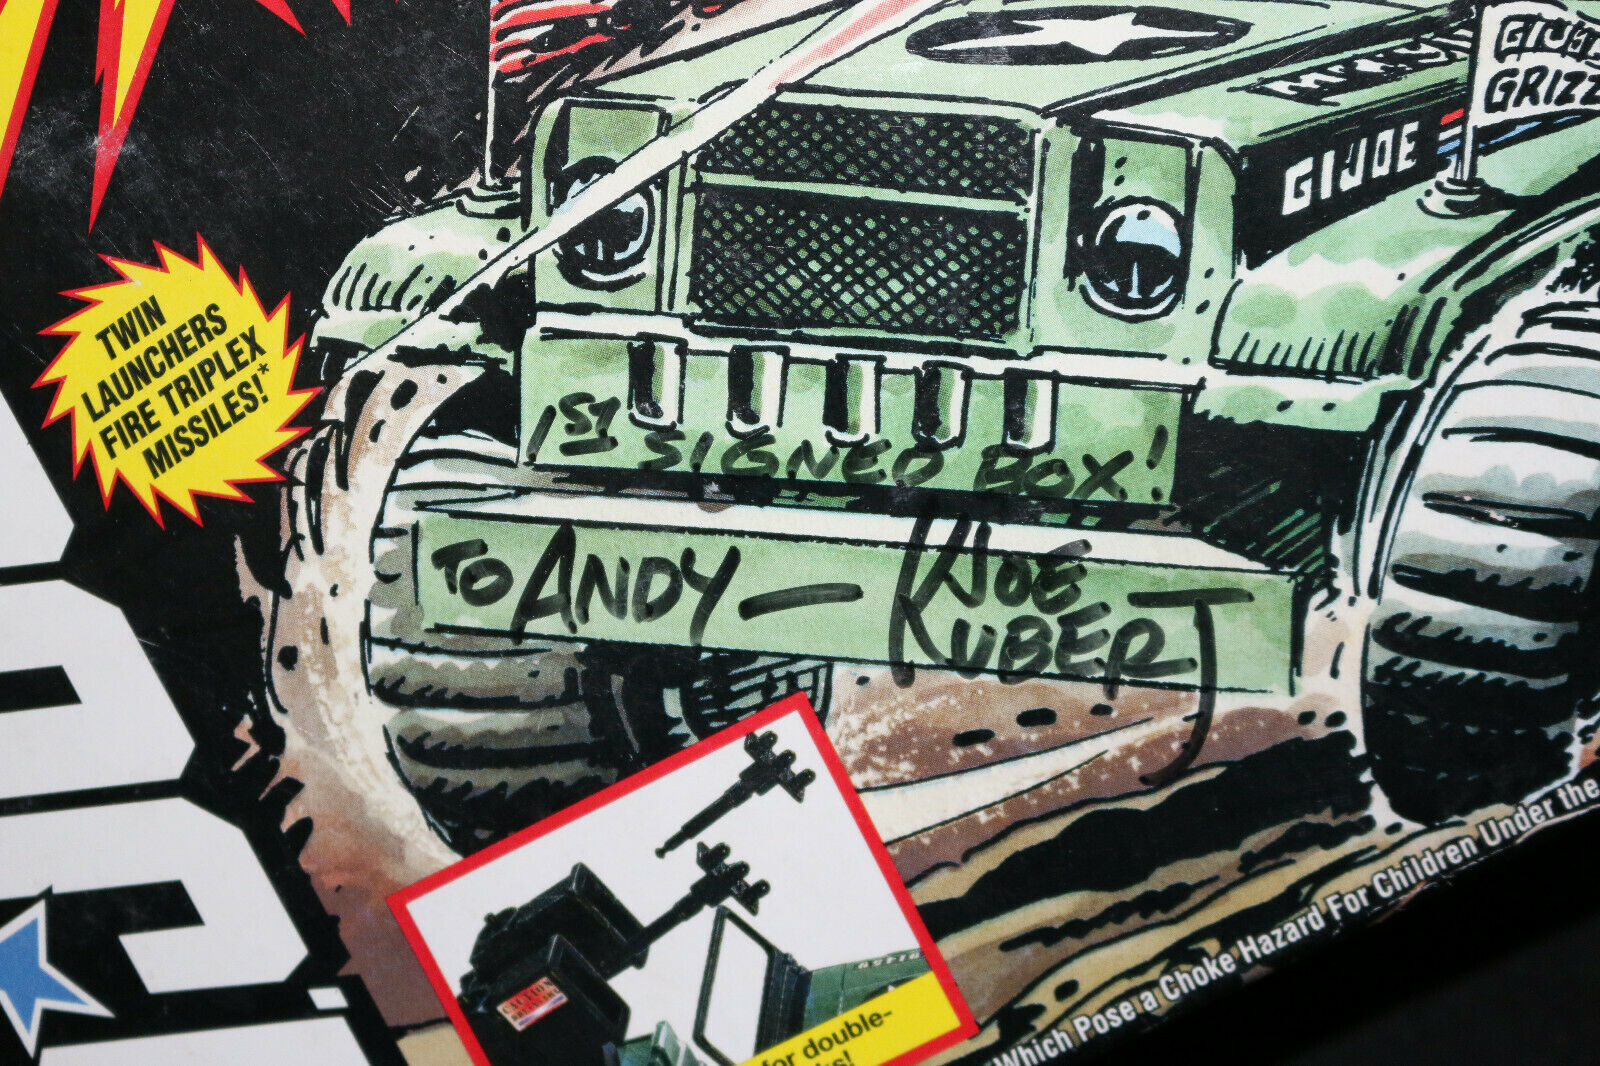 G.I. JOE Sgt. Savage Grizzly SS-1 Truck Box ONLY - Joe Kubert's w COA -  Signed | Comic Books - Modern Age